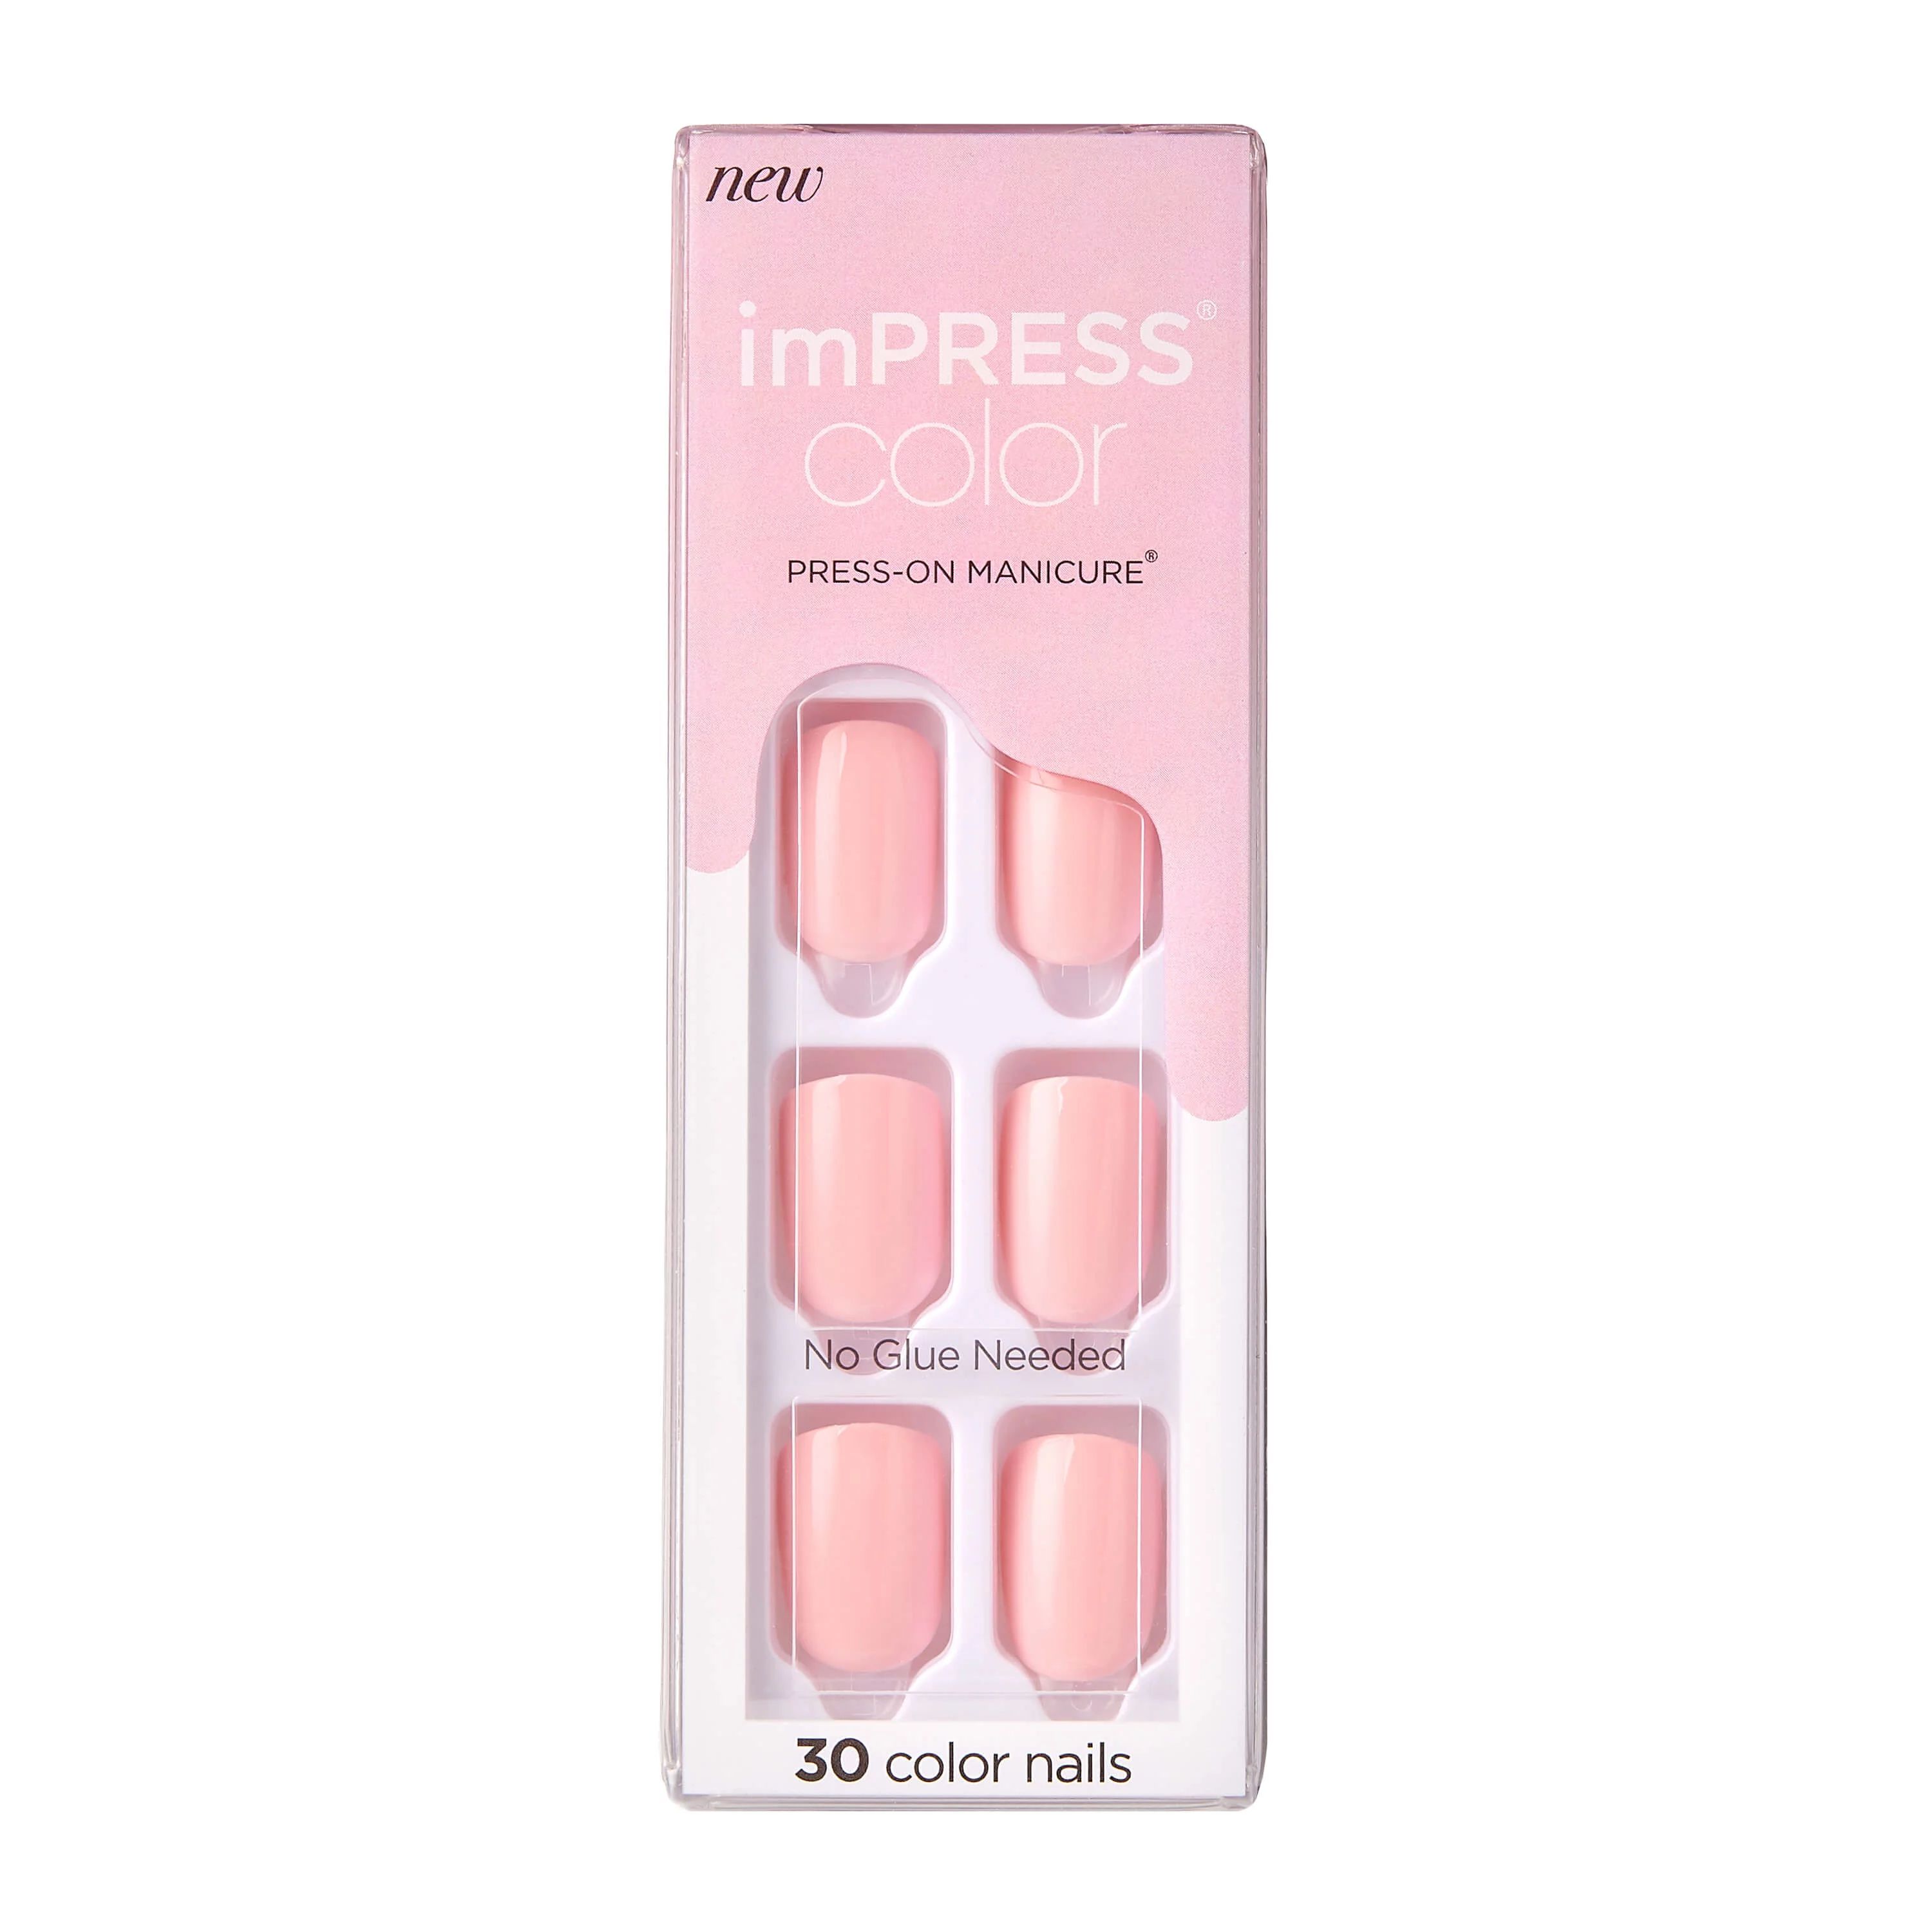 imPRESS Color Press-on Manicure, Pick Me Pink, Short - Walmart.com | Walmart (US)